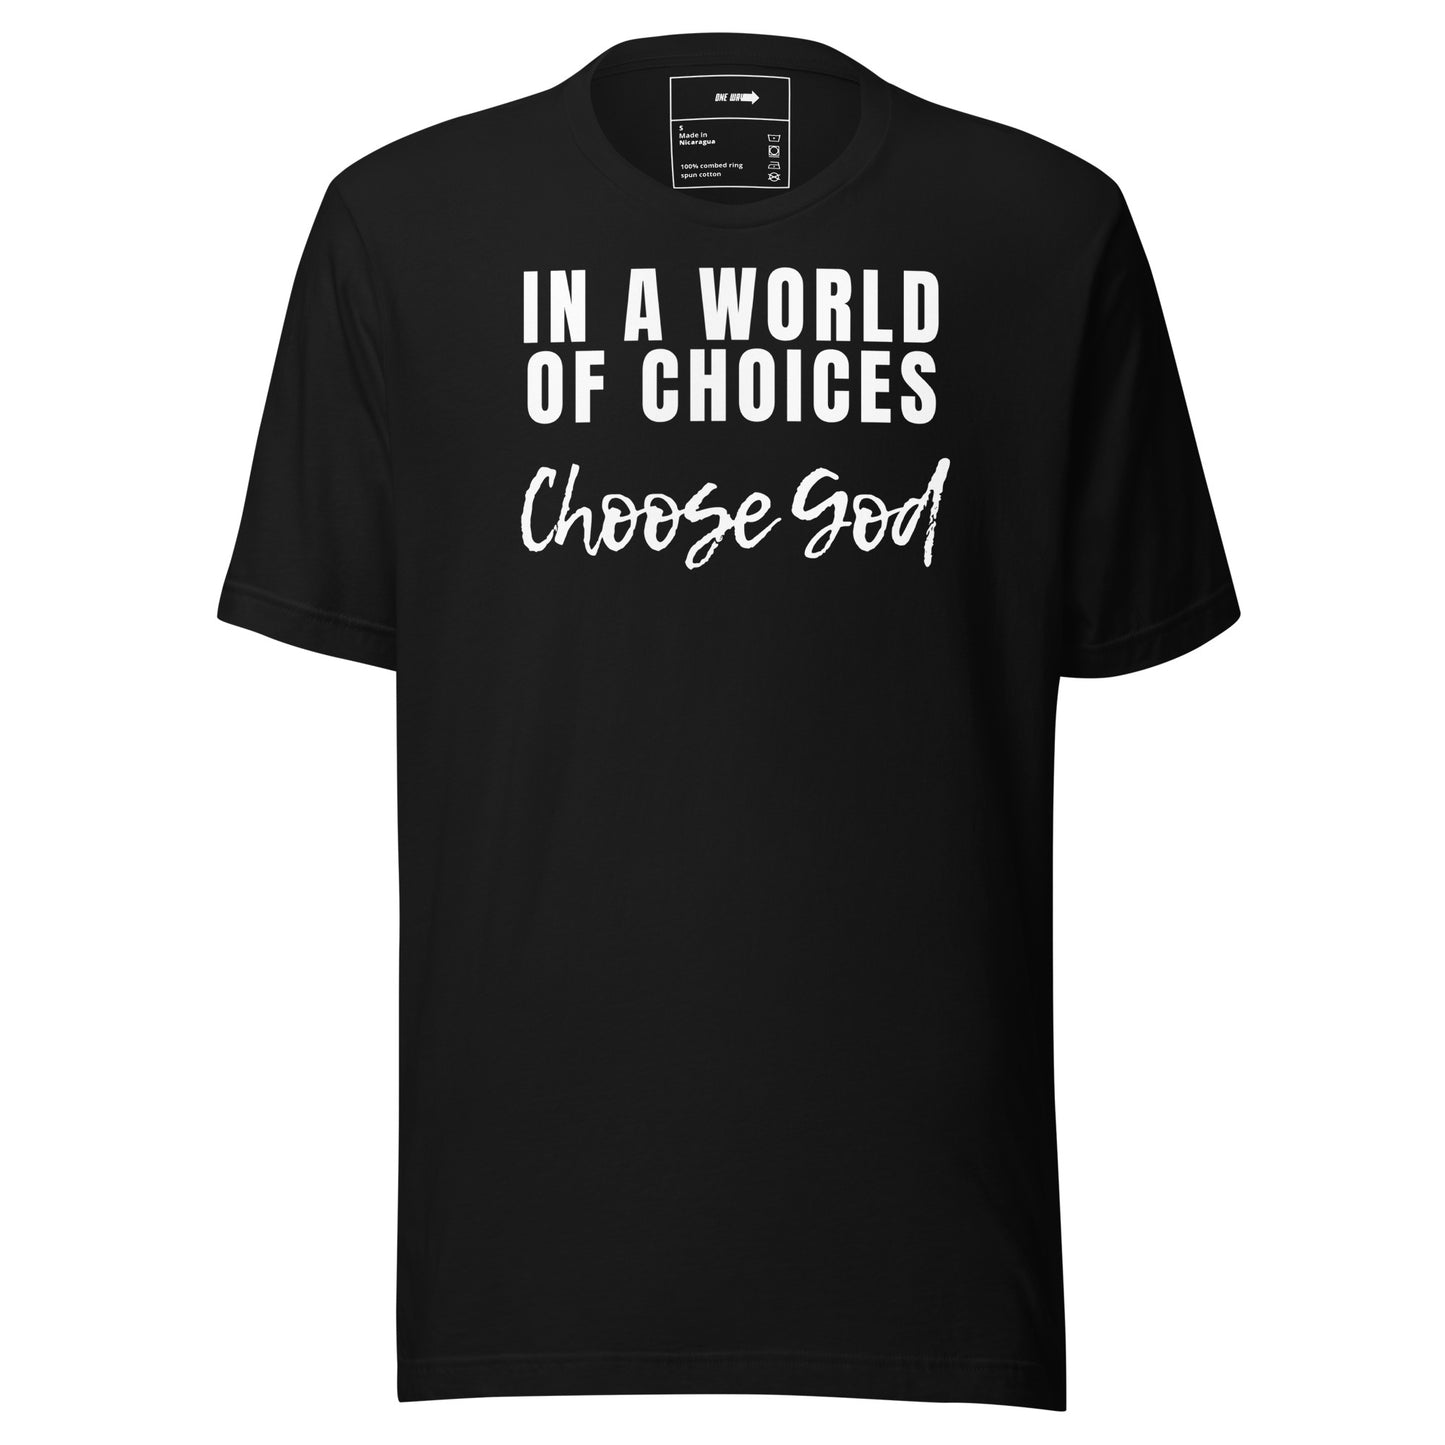 Christian t-shirt